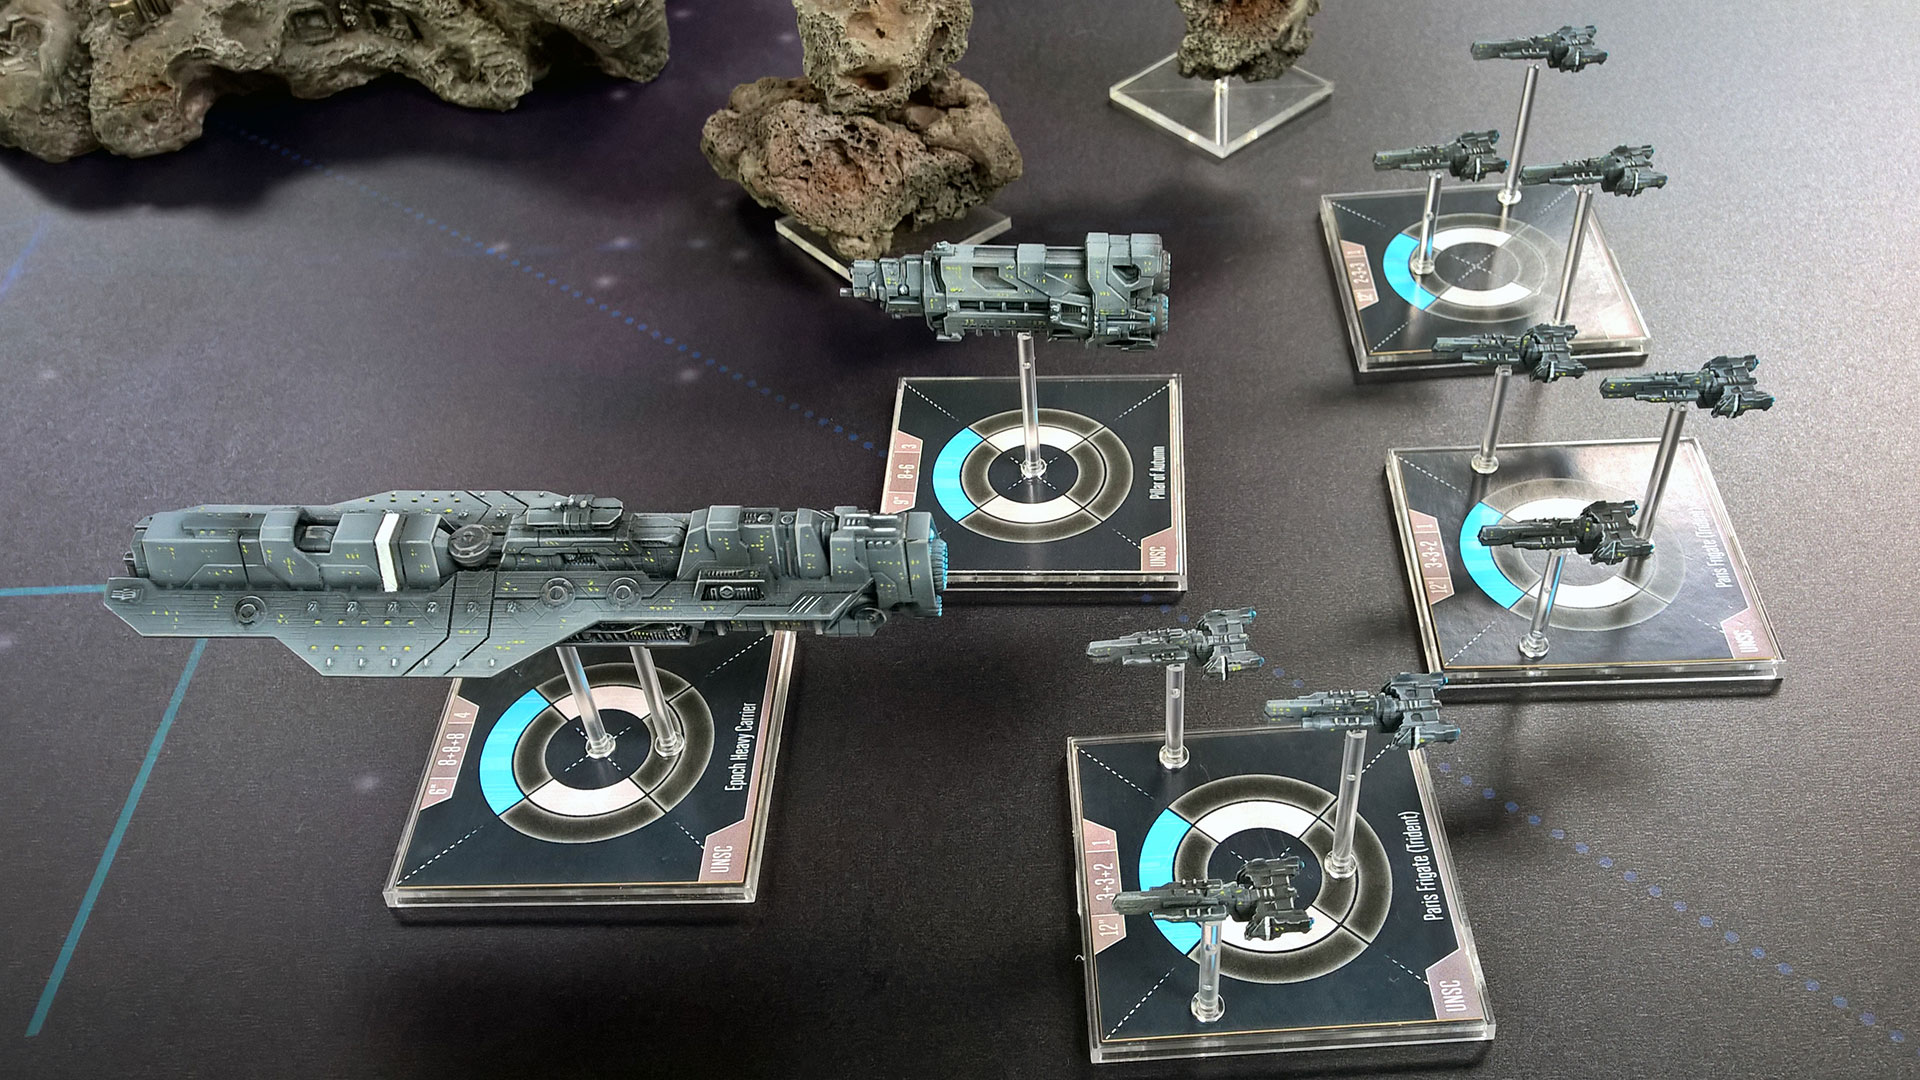 spartan games halo fleet battles